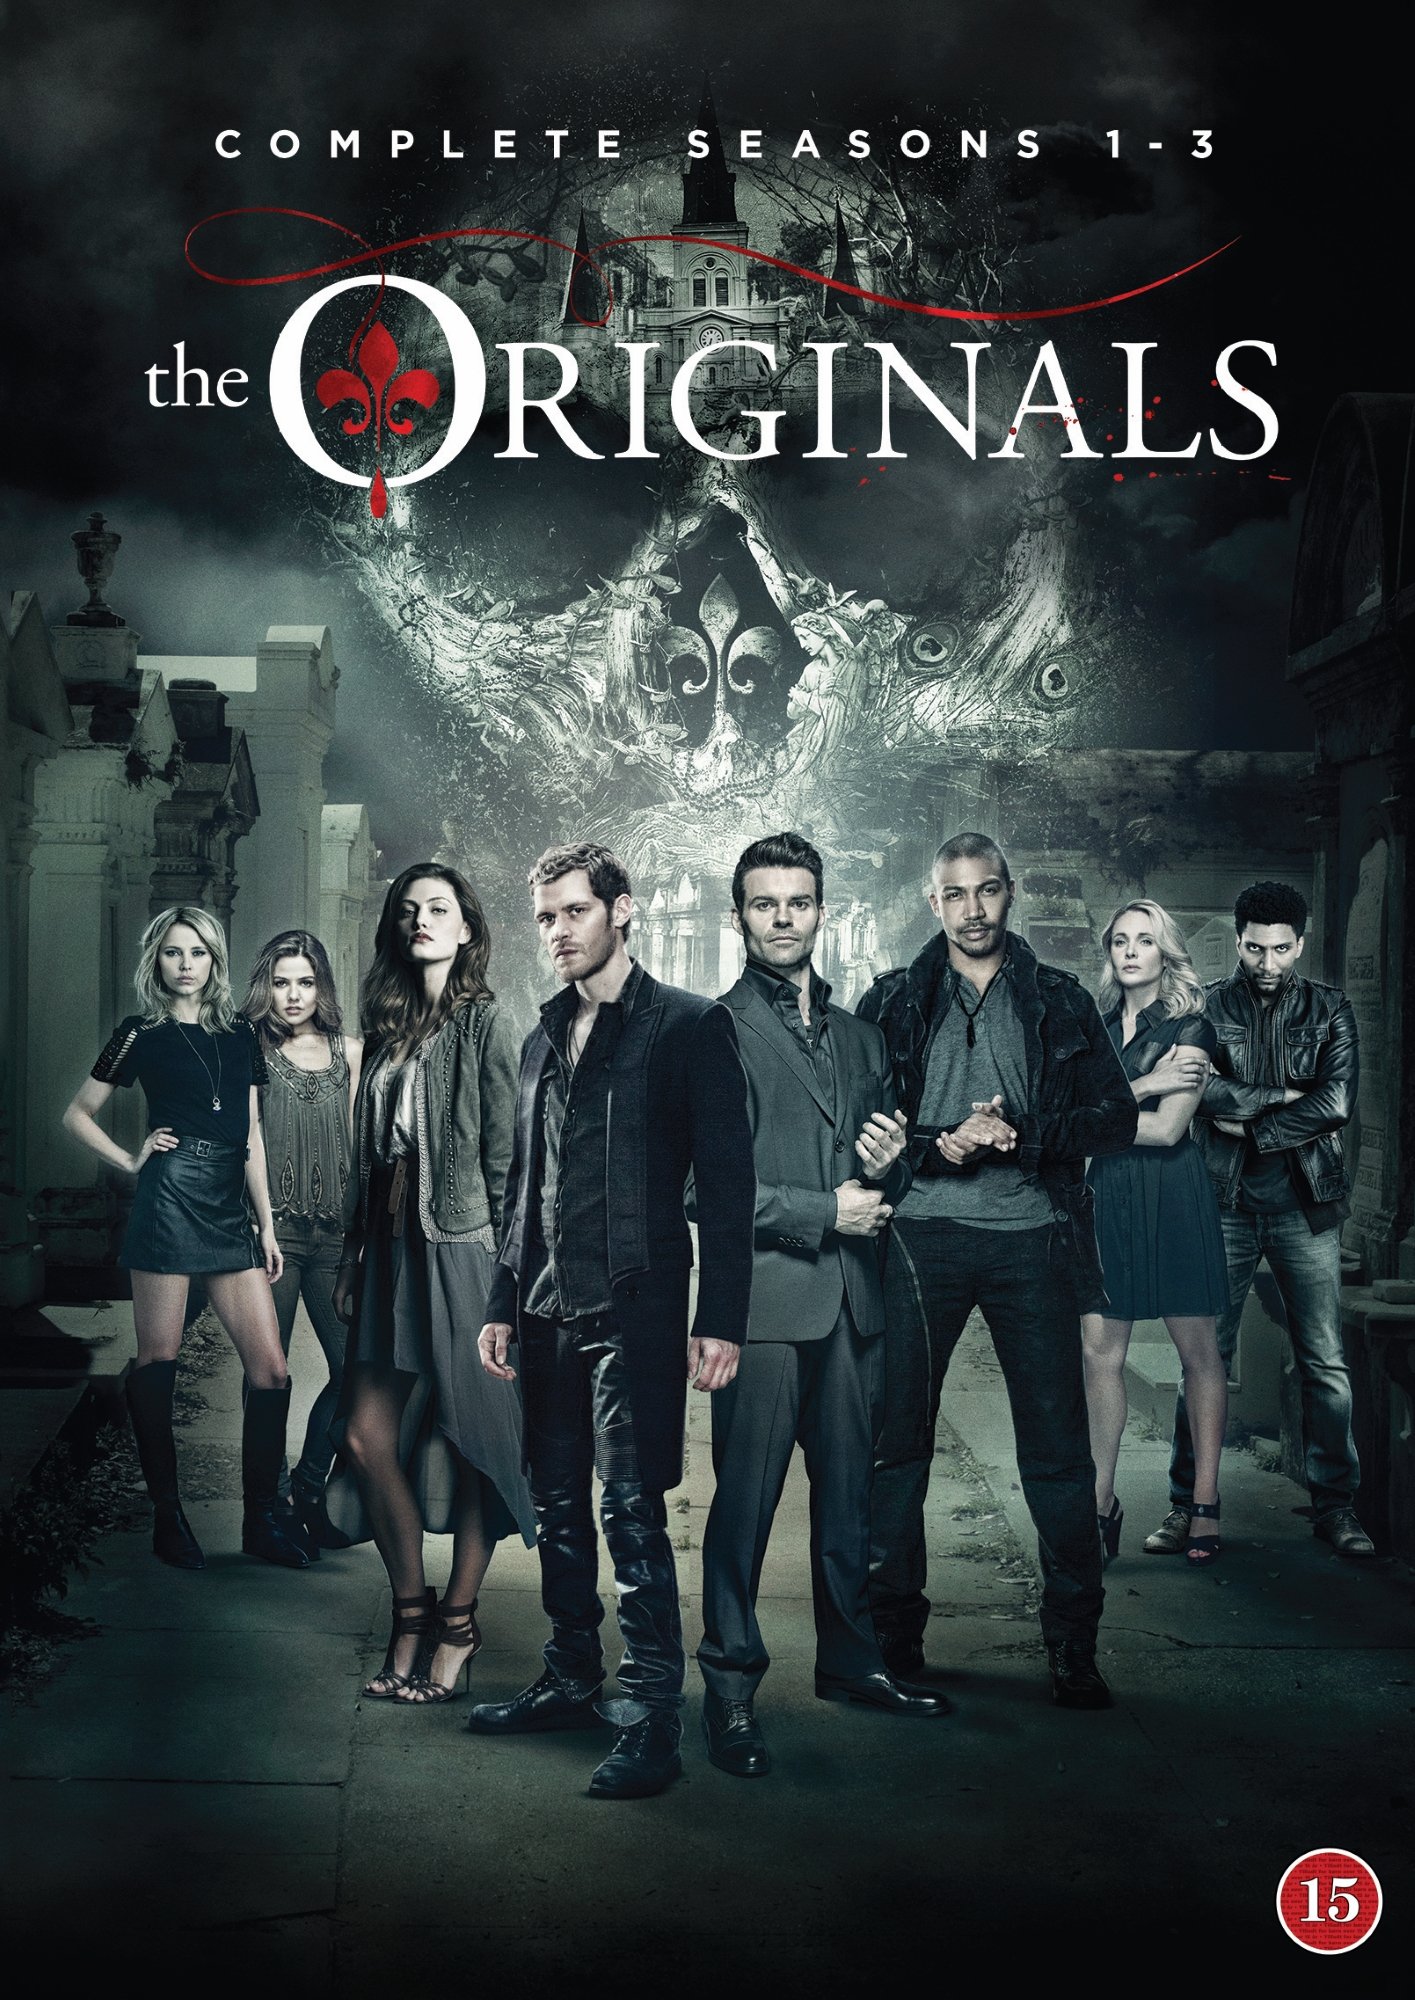 The Originals Season 1 Poster